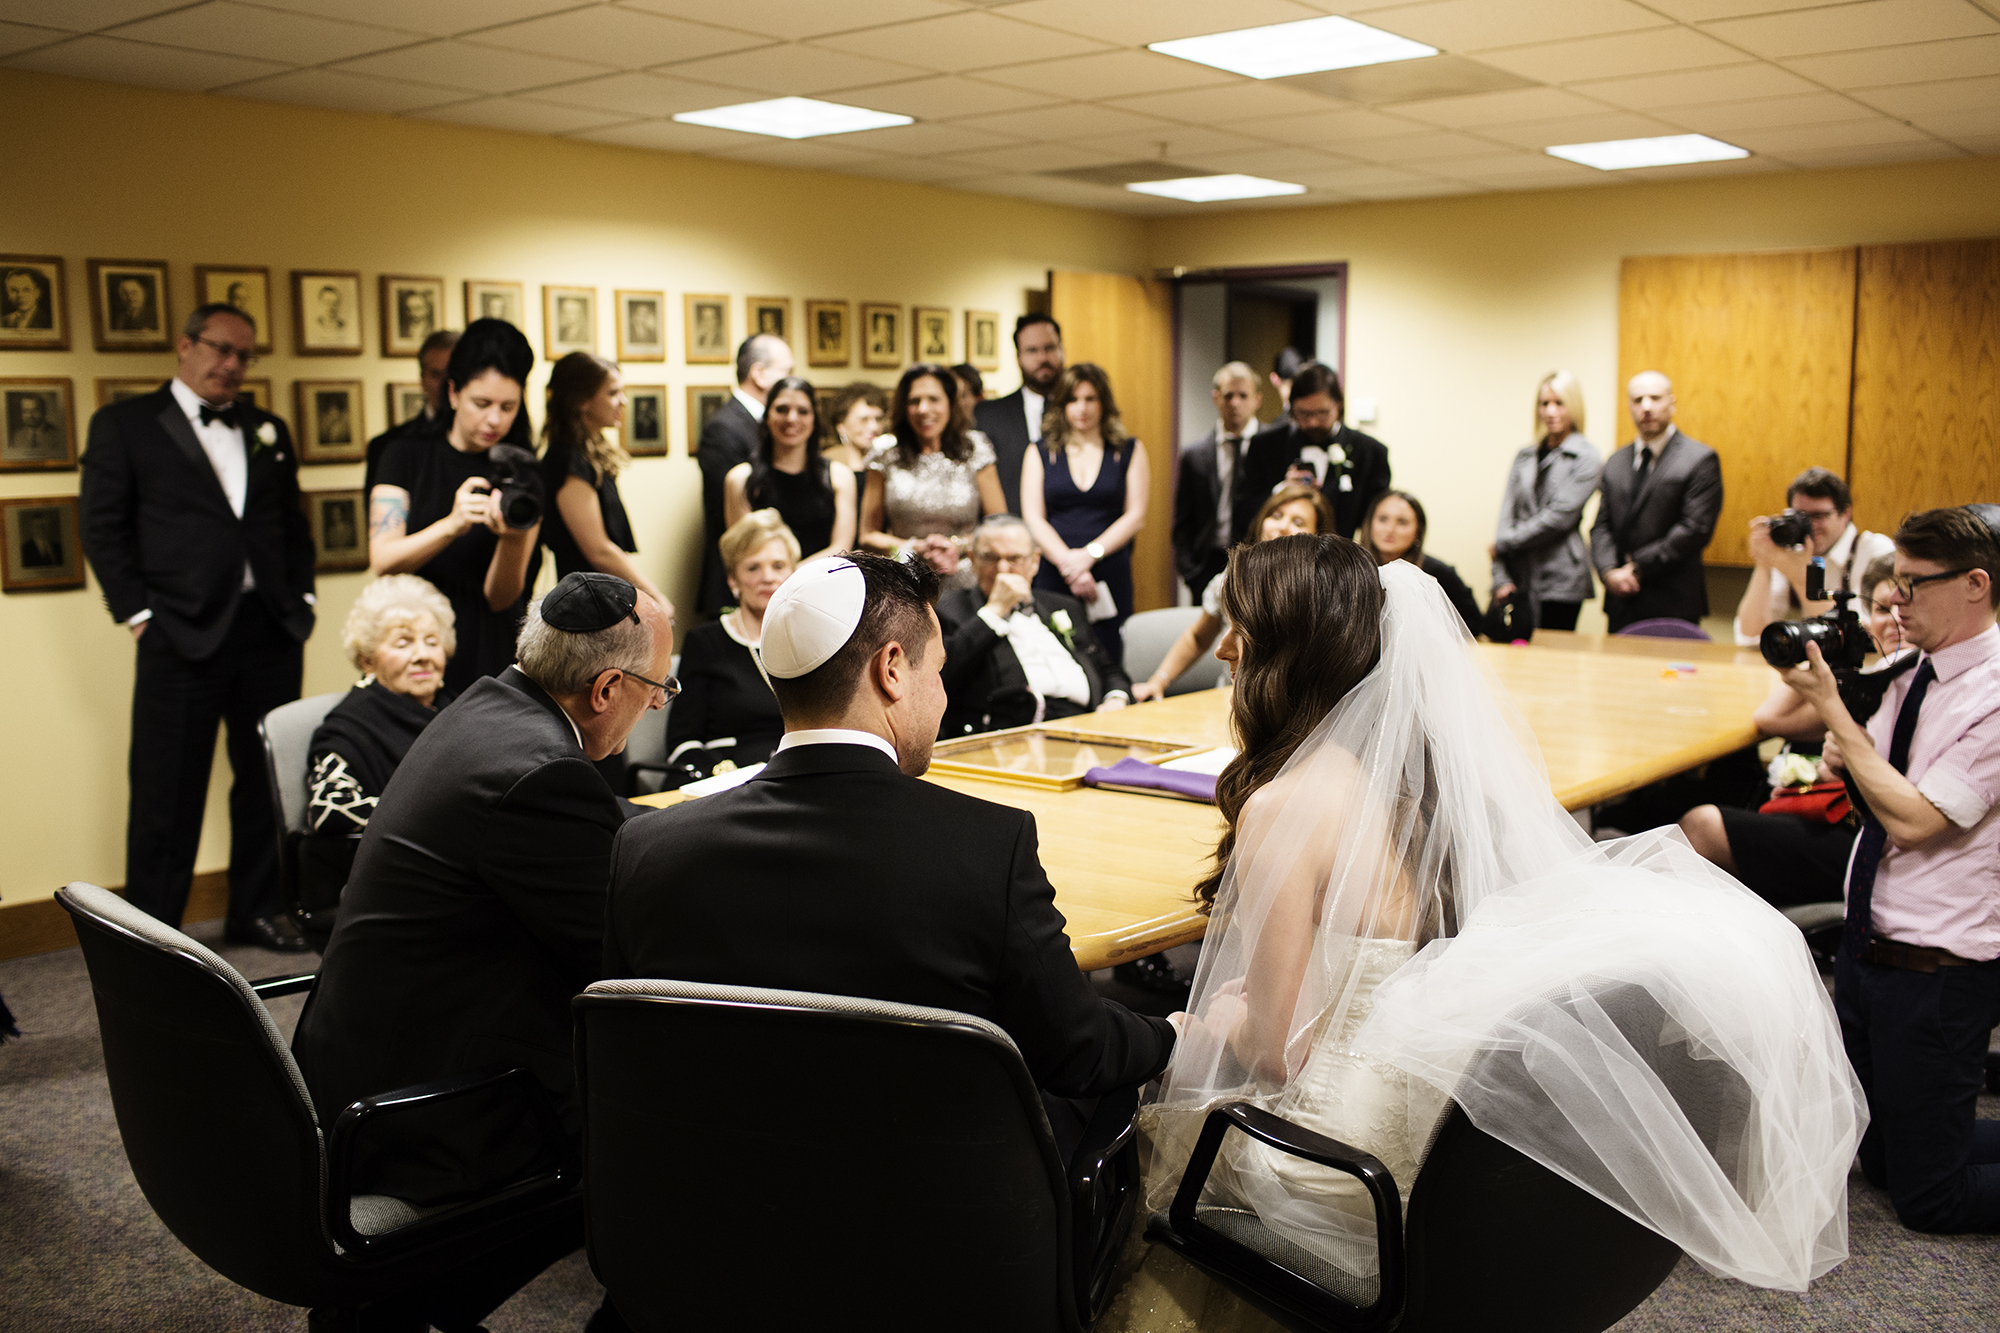 Adath Jeshurun Congregation Wedding Photos | Photography by Photogen Inc. | Eliesa Johnson | Based in Minneapolis, Minnesota